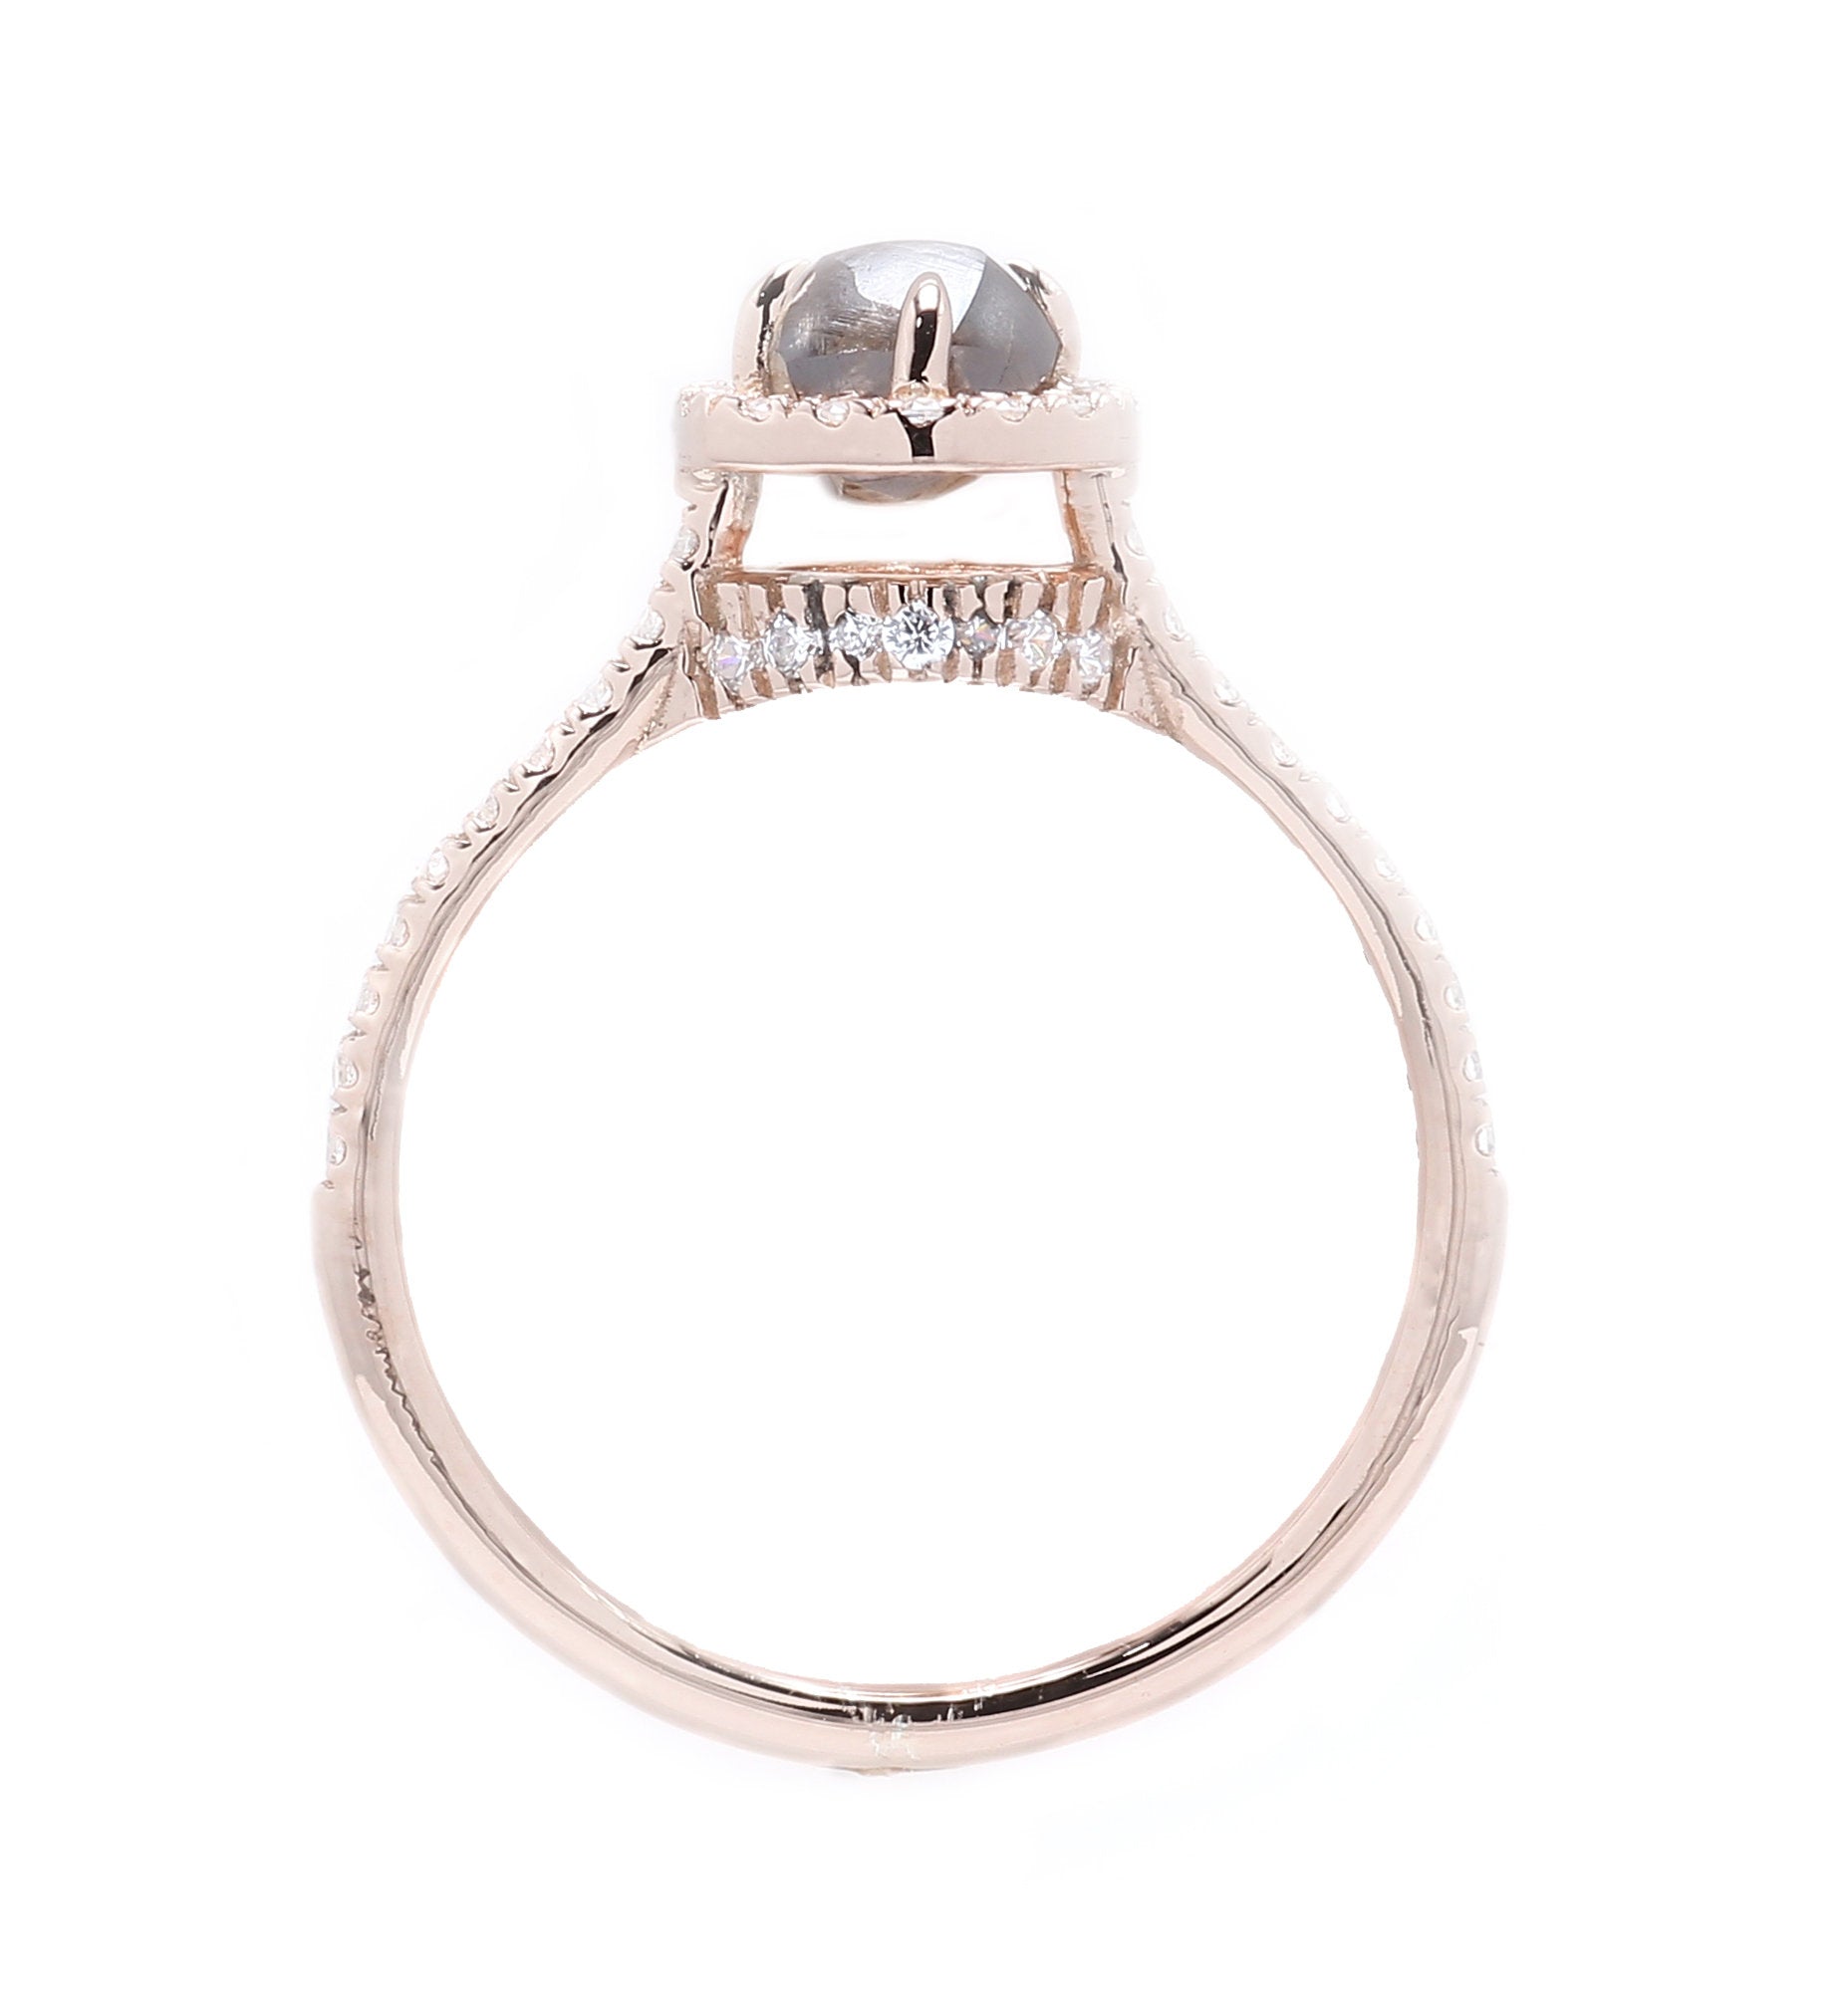 Brown Rough Diamond 14K Solid Rose White Yellow Gold Ring Engagement Wedding Gift Ring KD848